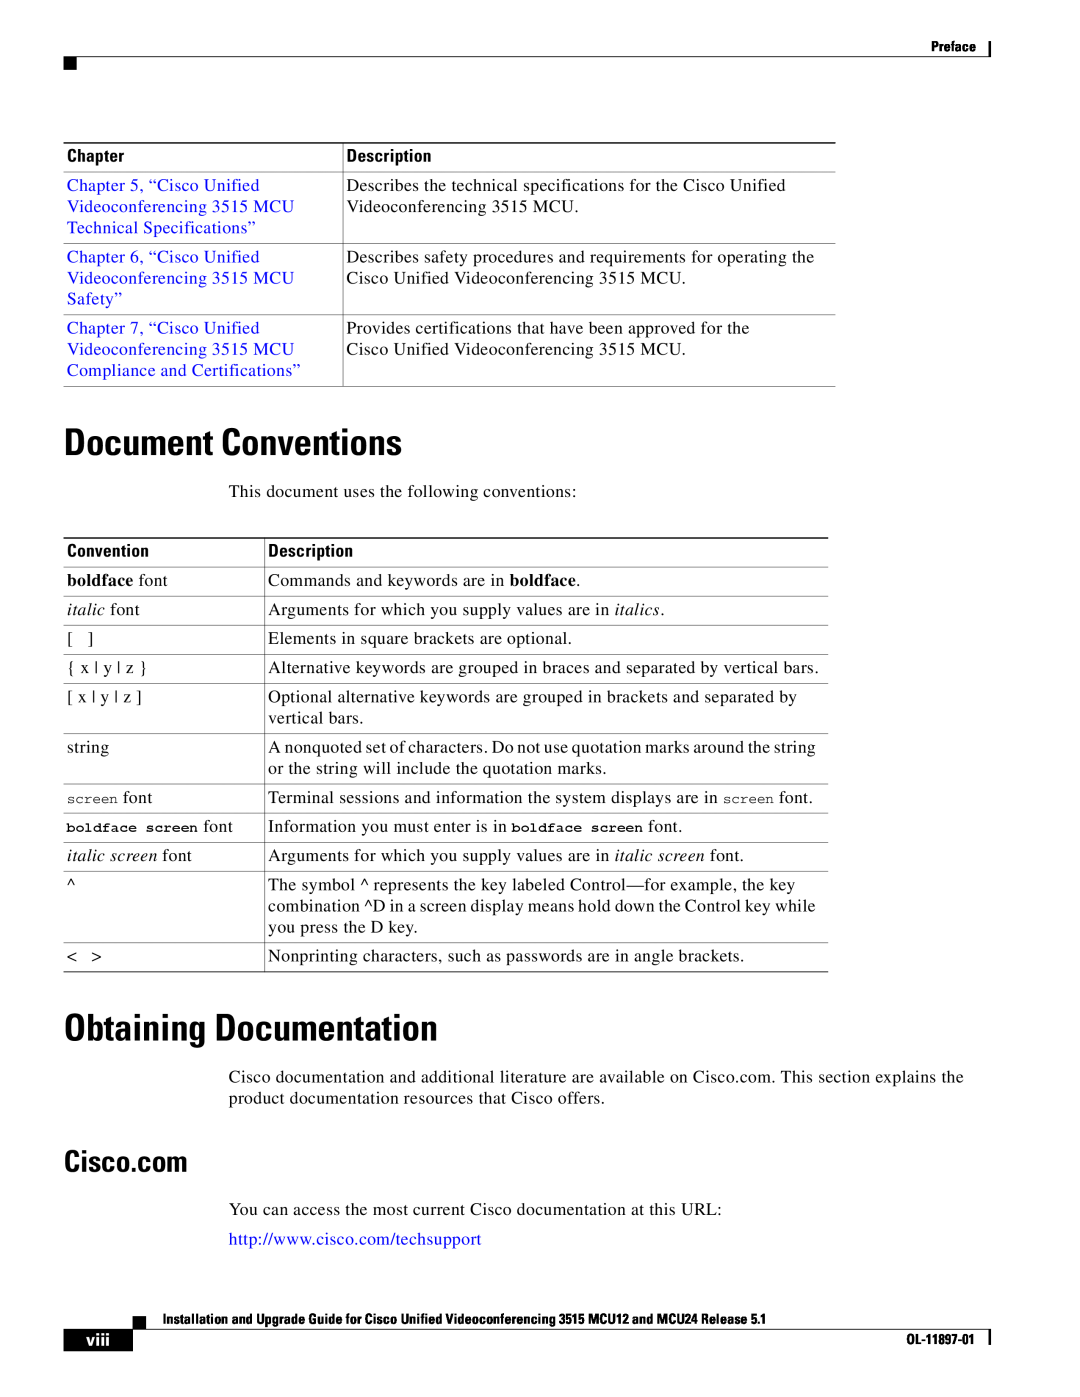 Cisco Systems MCU24 Document Conventions, Obtaining Documentation, Cisco.com, Chapter, Description, boldface font, viii 